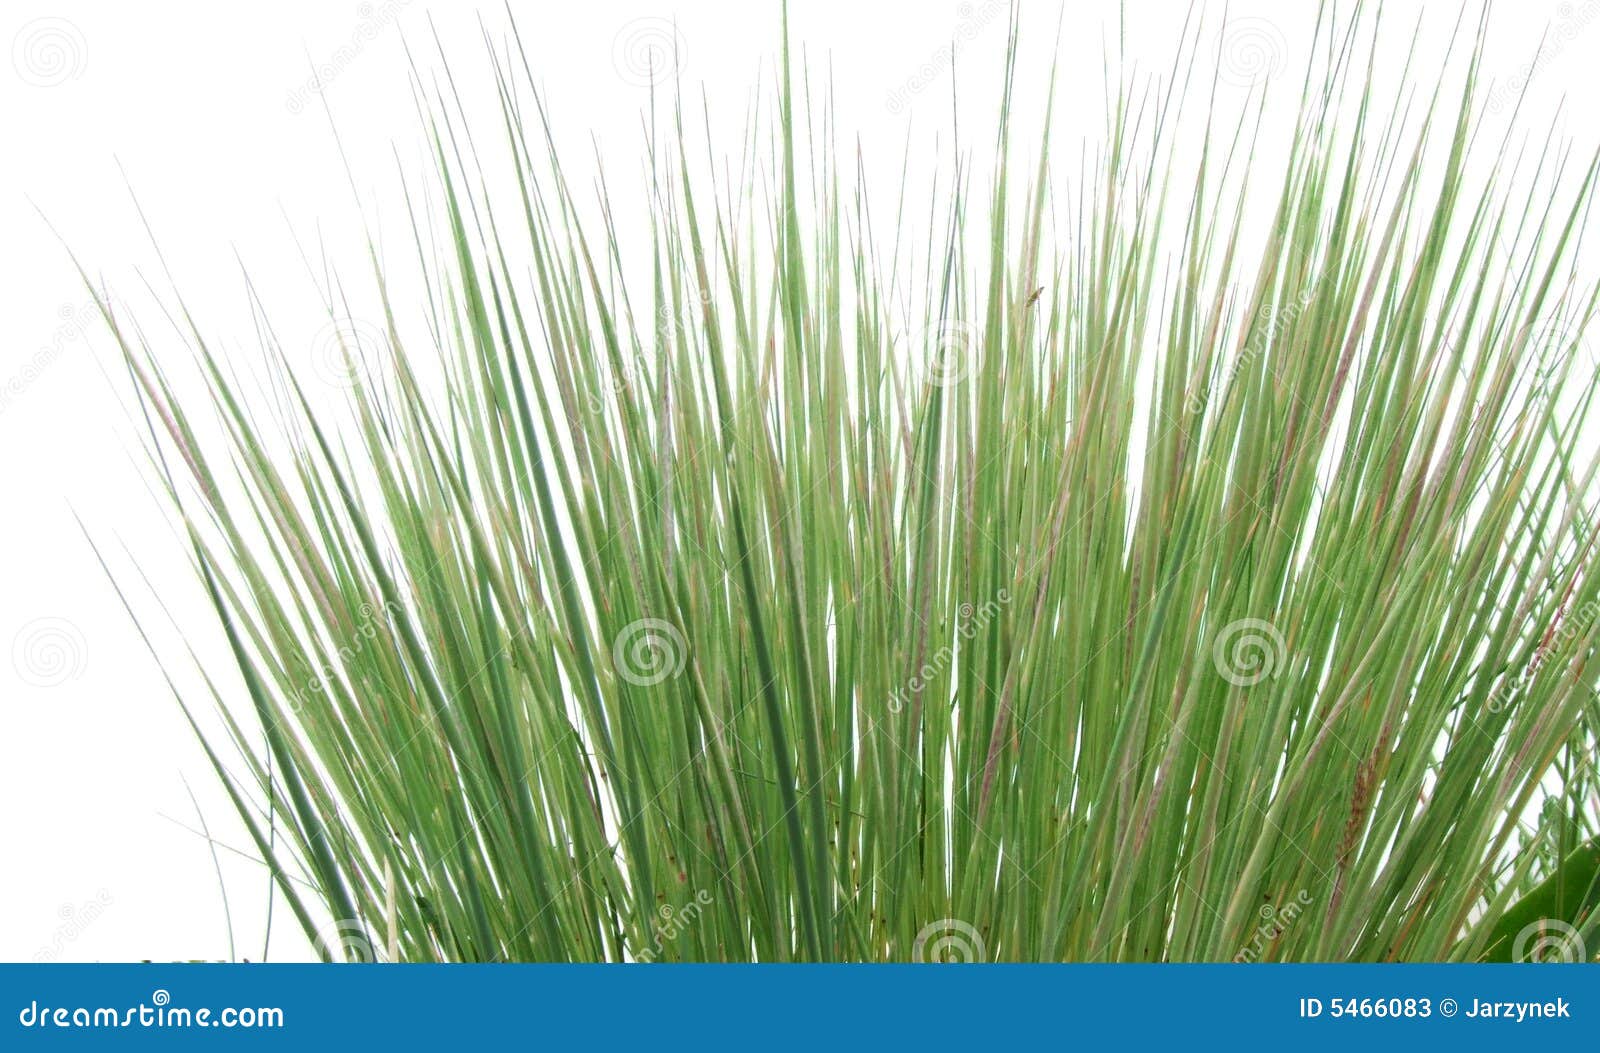 Clear grass. Пучок травы. Трава на белом фоне. Трава на прозрачном фоне. Пучок травы на прозрачном фоне.